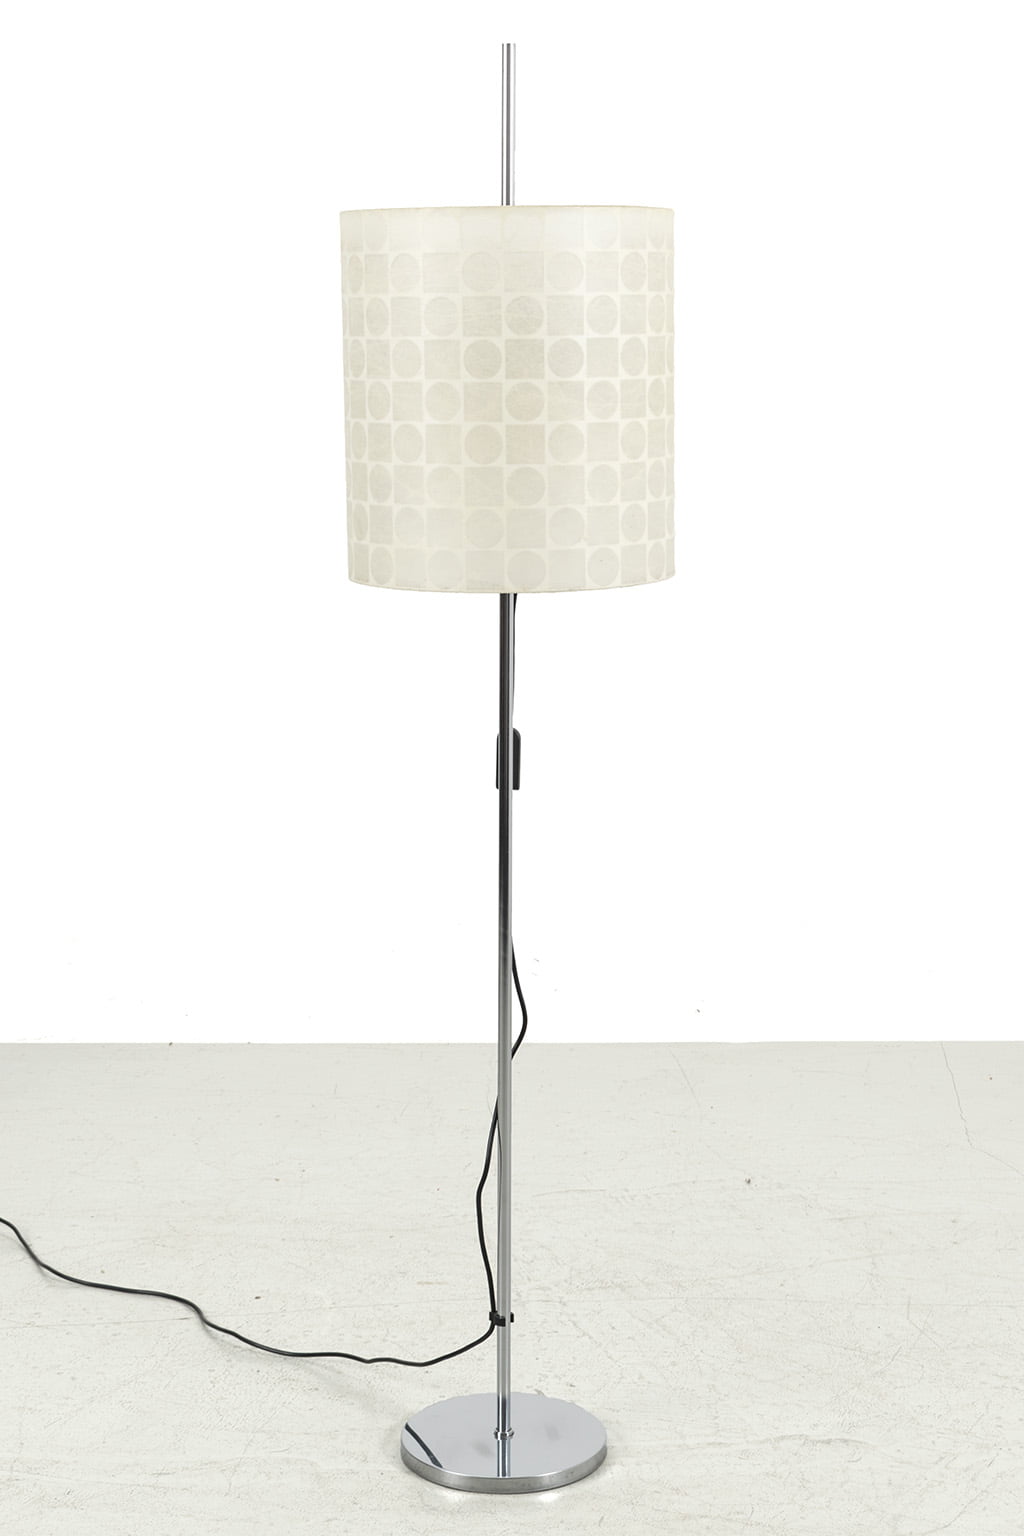 Goldkant floor lamp